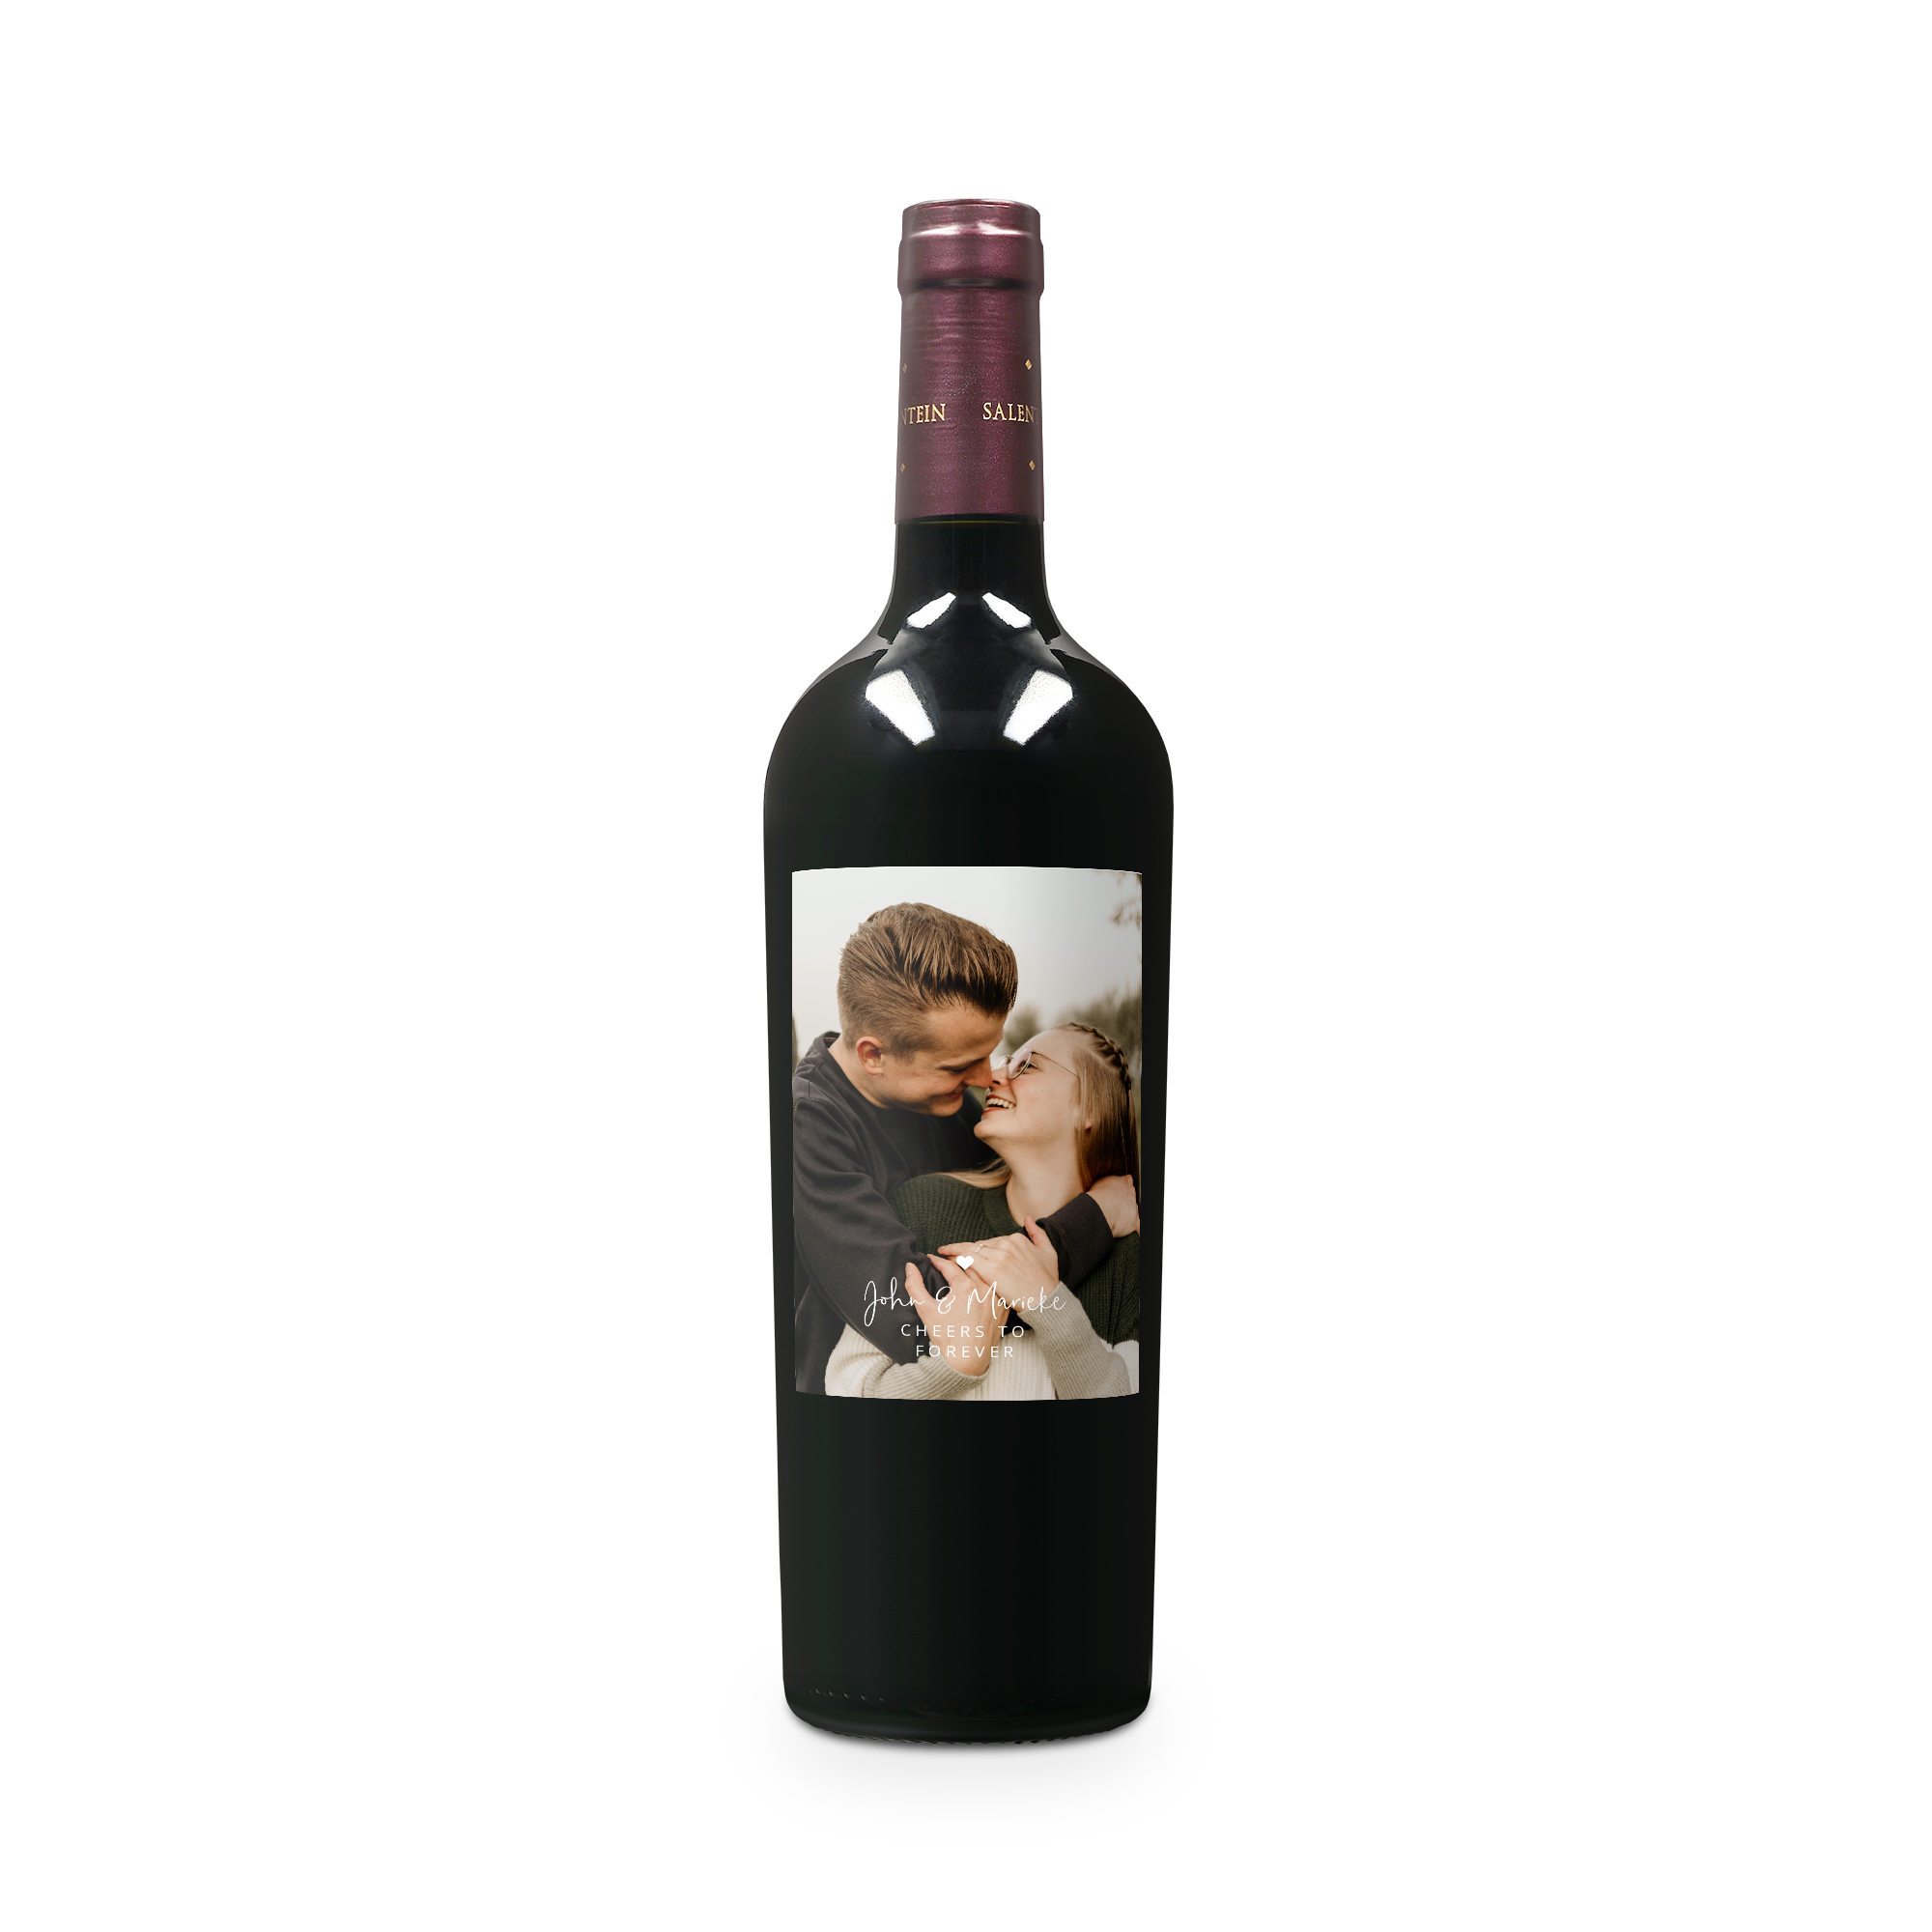 Personalizowane wino Salentein Merlot